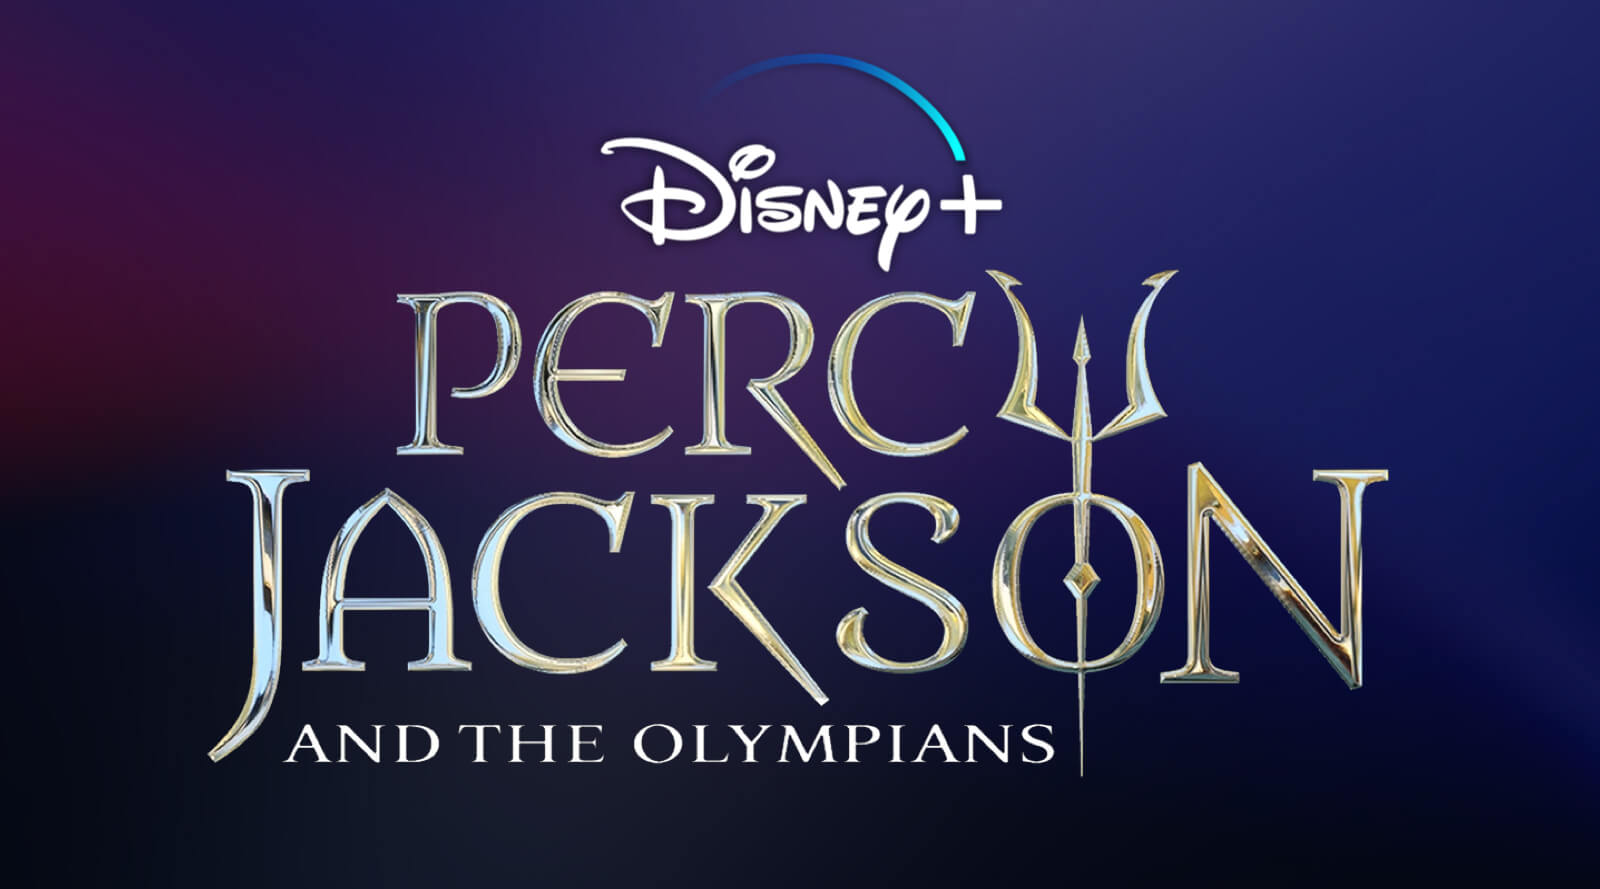 ‘Percy Jackson’ Series Circling Directors, Casting Has Not Begun